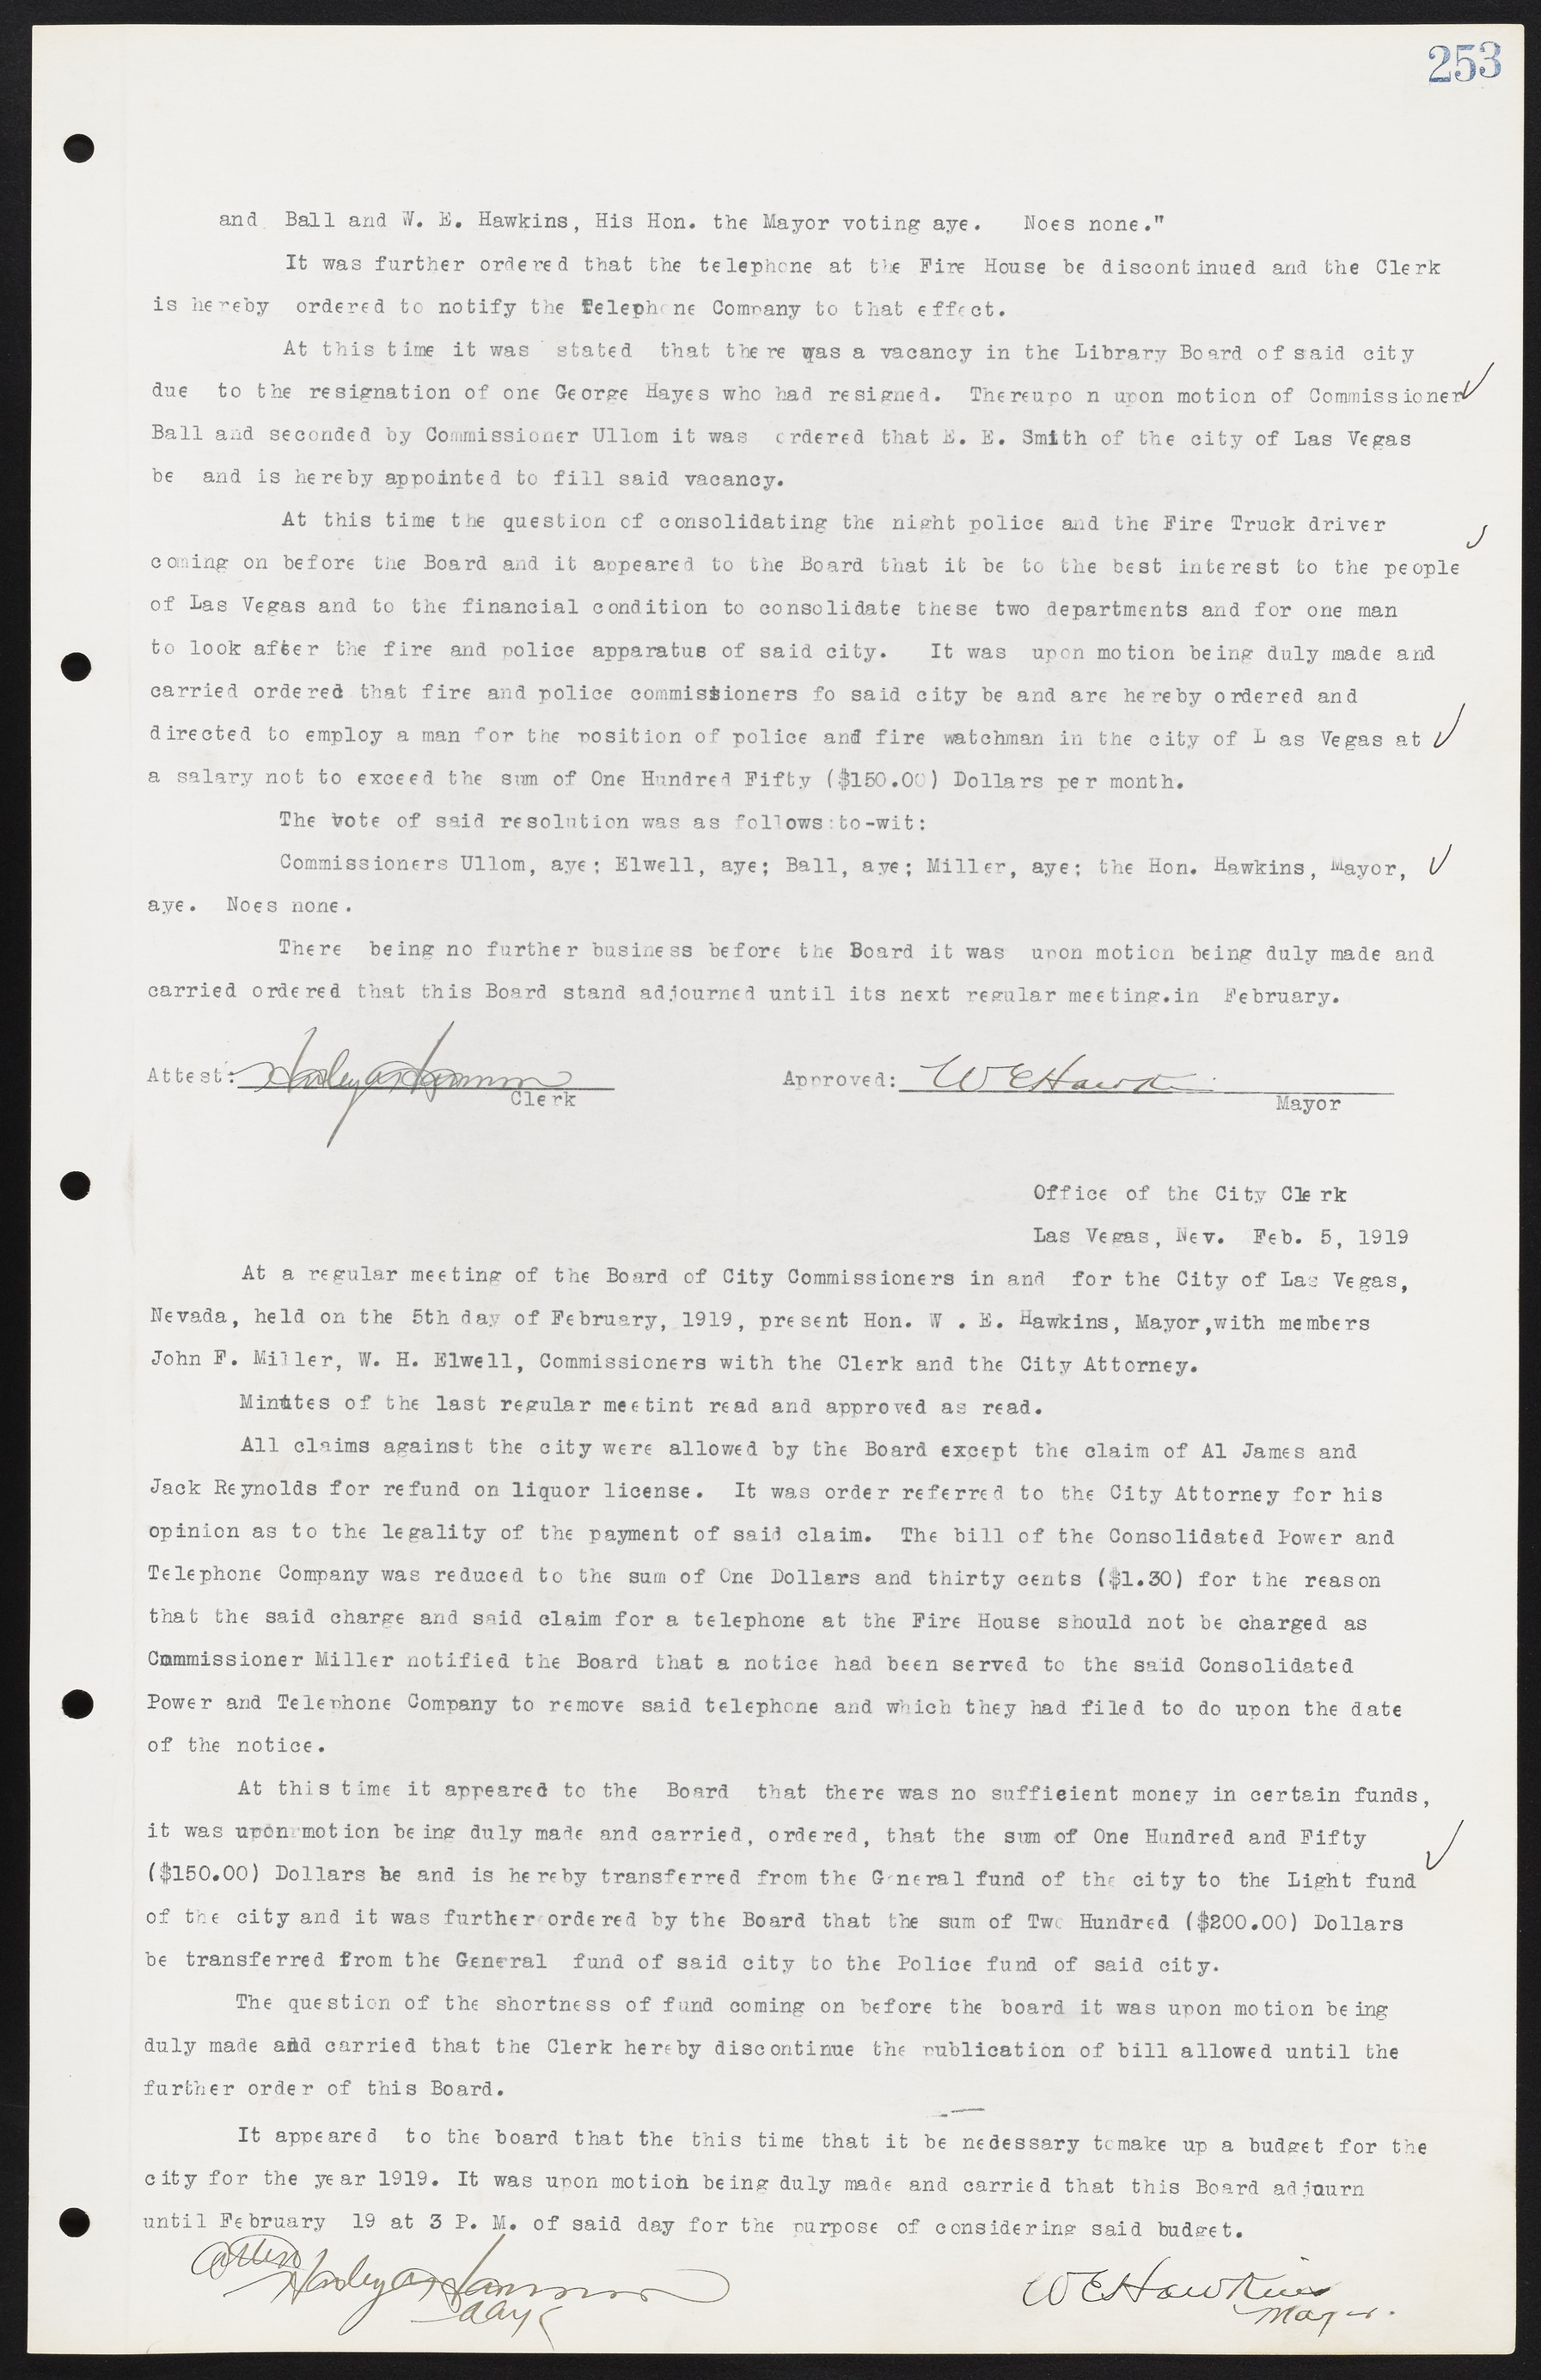 Las Vegas City Commission Minutes, June 22, 1911 to February 7, 1922, lvc000001-269